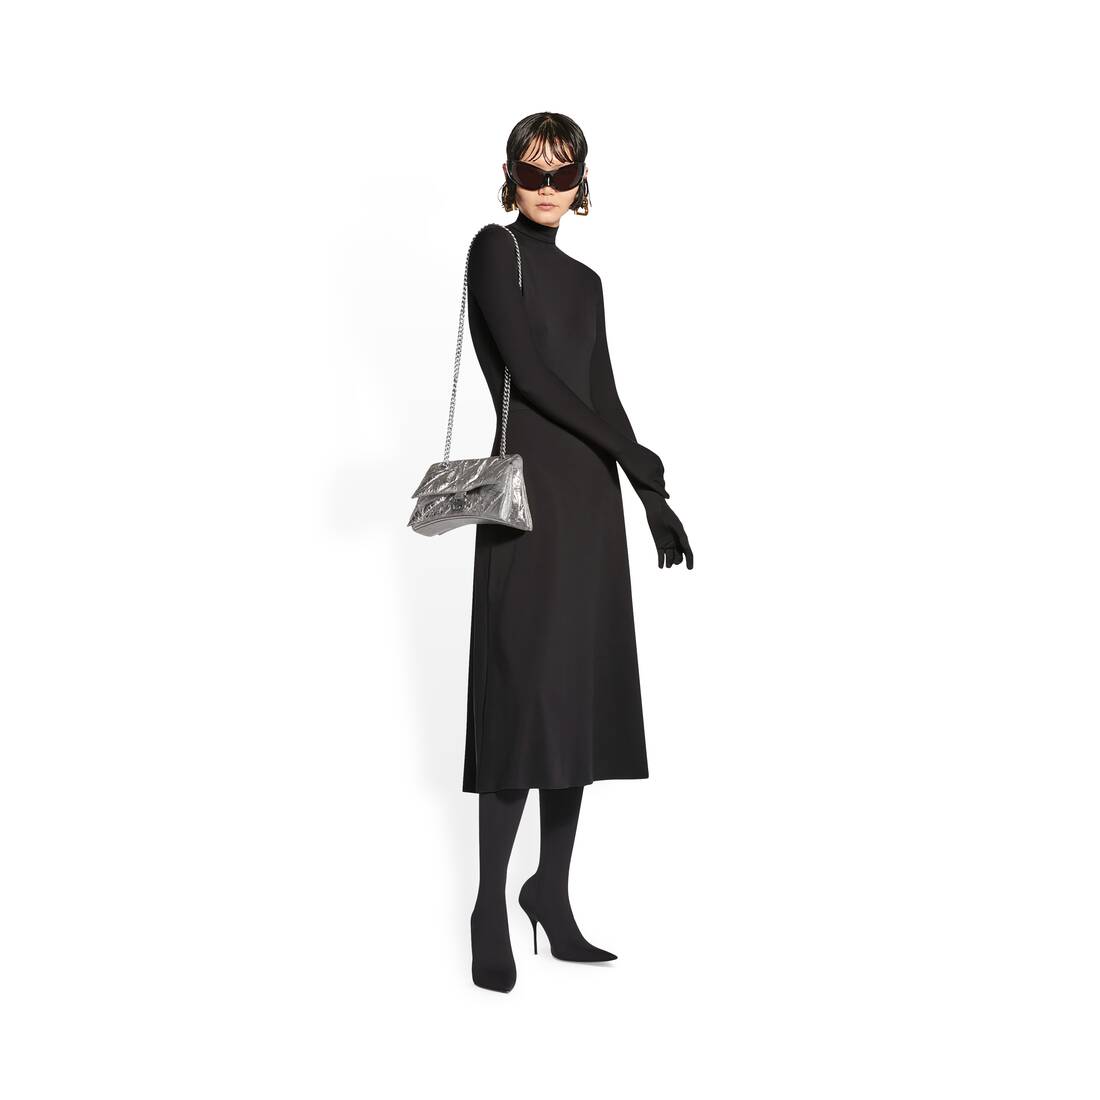 Balenciaga Women's Crush Medium Leather Sling Bag